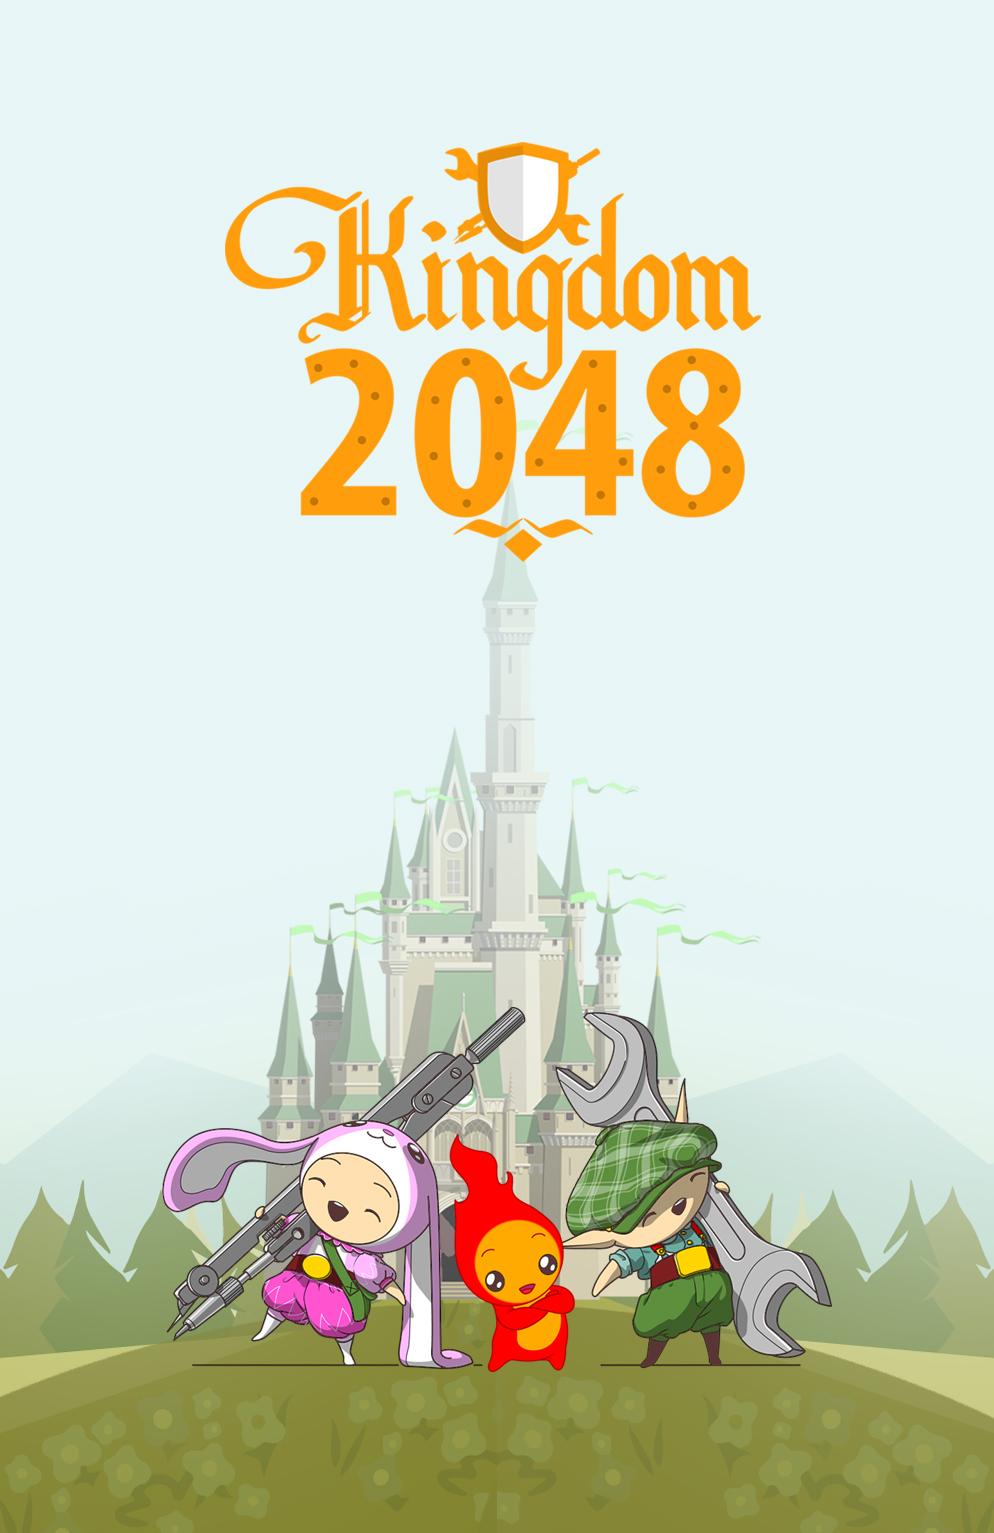 2048 kingdom 2048 game cartoon heroes Bosse forest snow bear underwater lux caput masyuk andrey game Game Designe artist